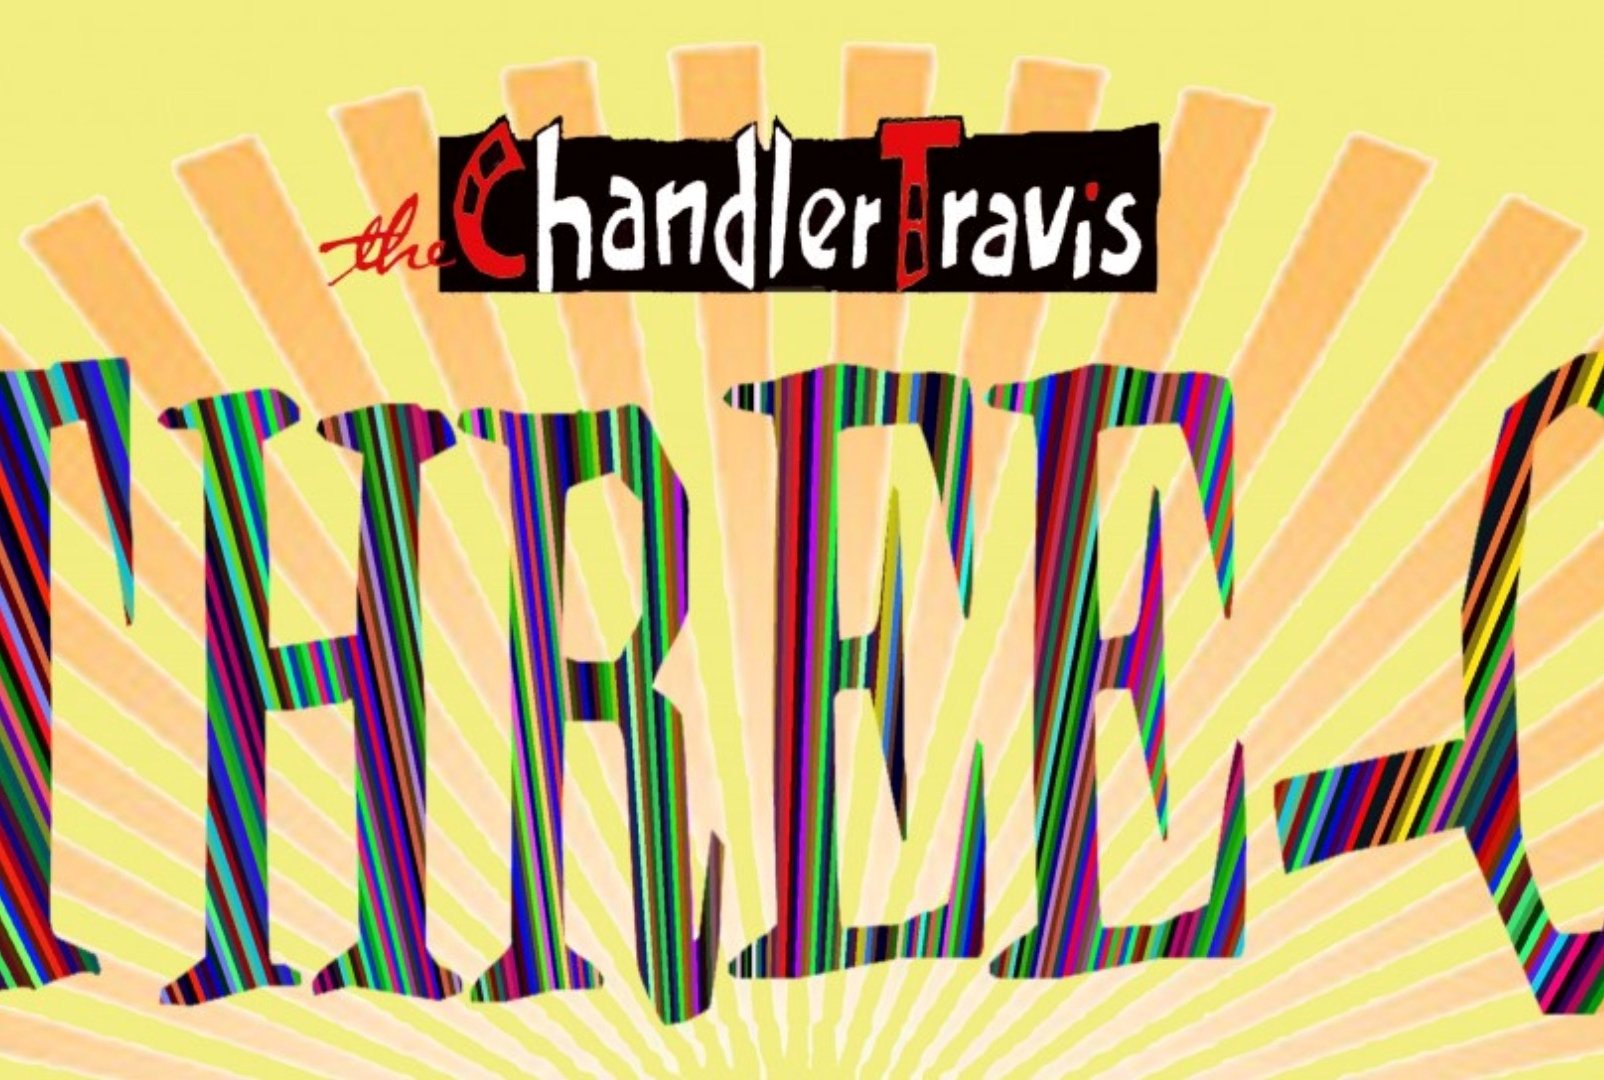 The Chandler Travis Three-O plus Simple Friend